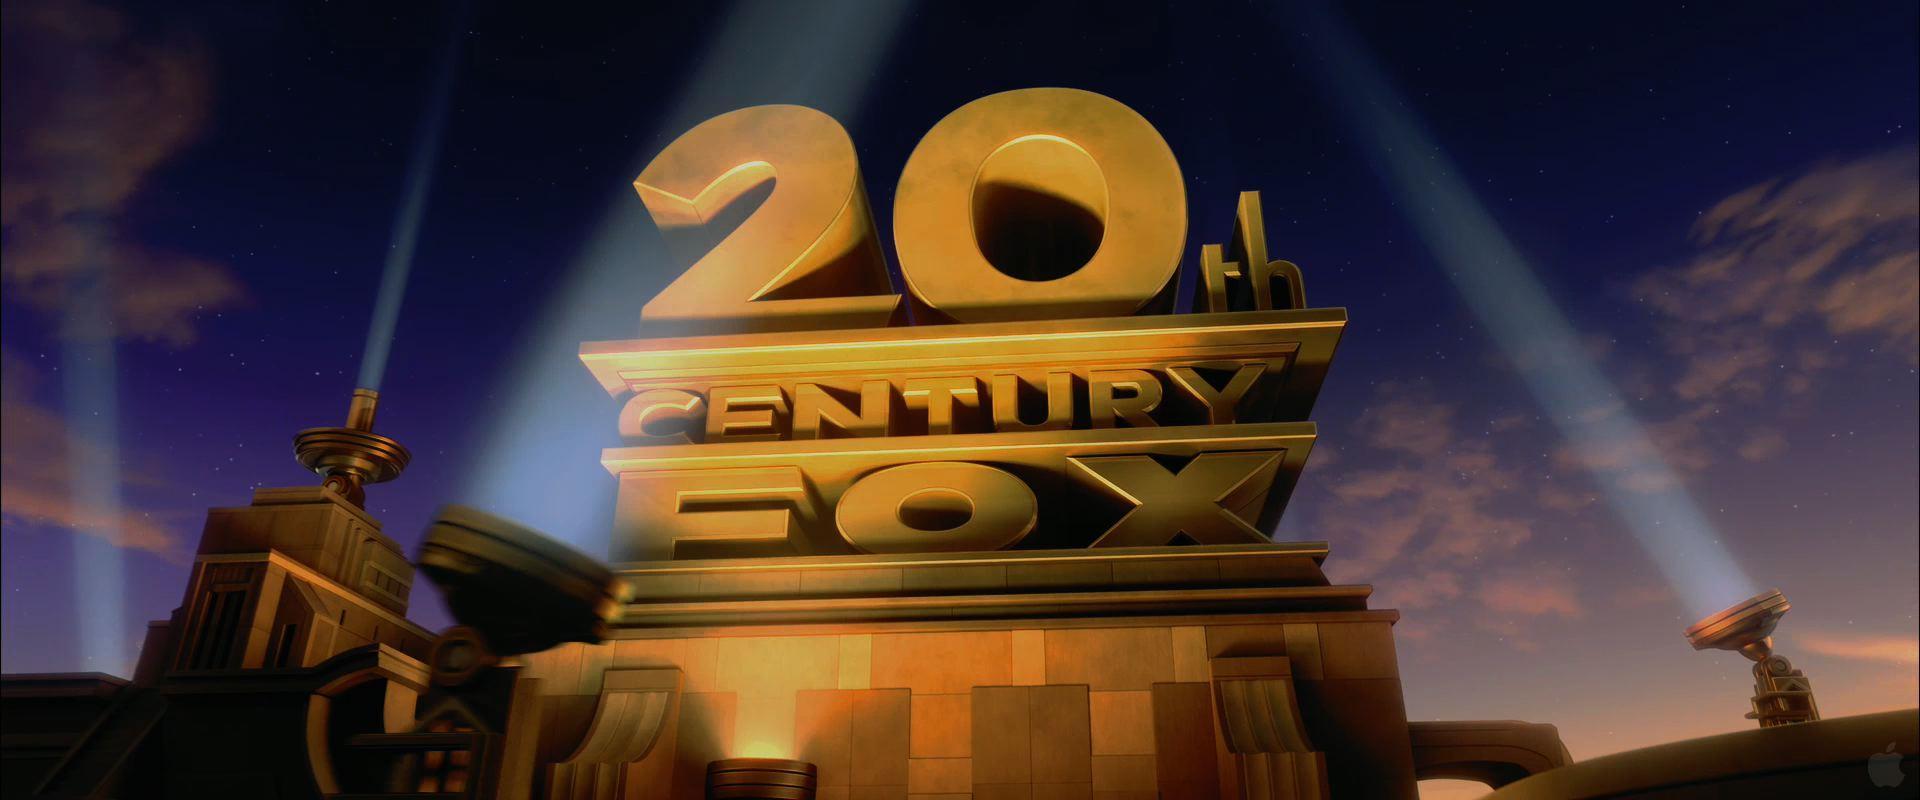 20th Century Fox Wallpaper For Ipad